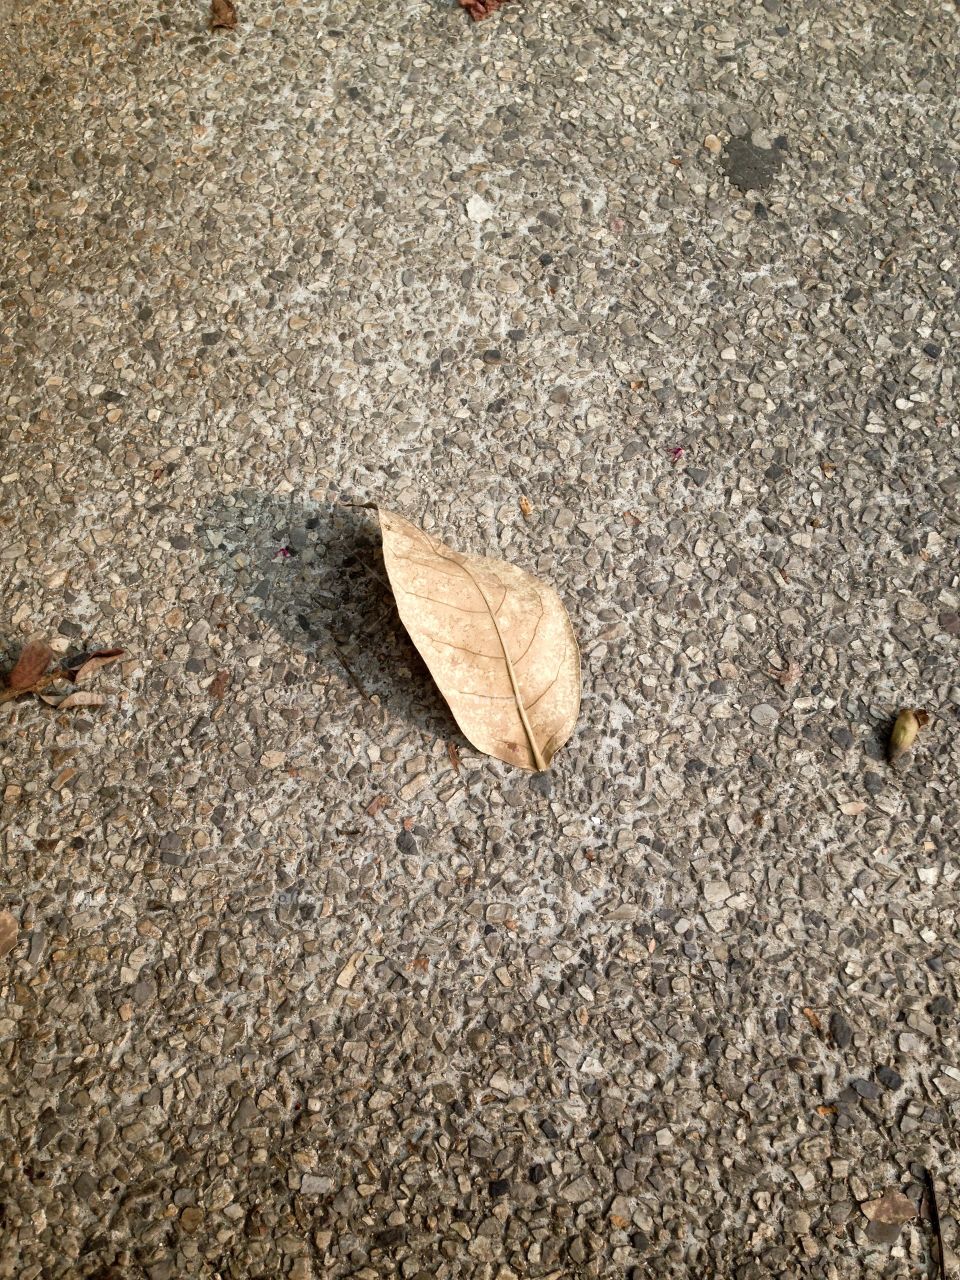 Dry leaf morning